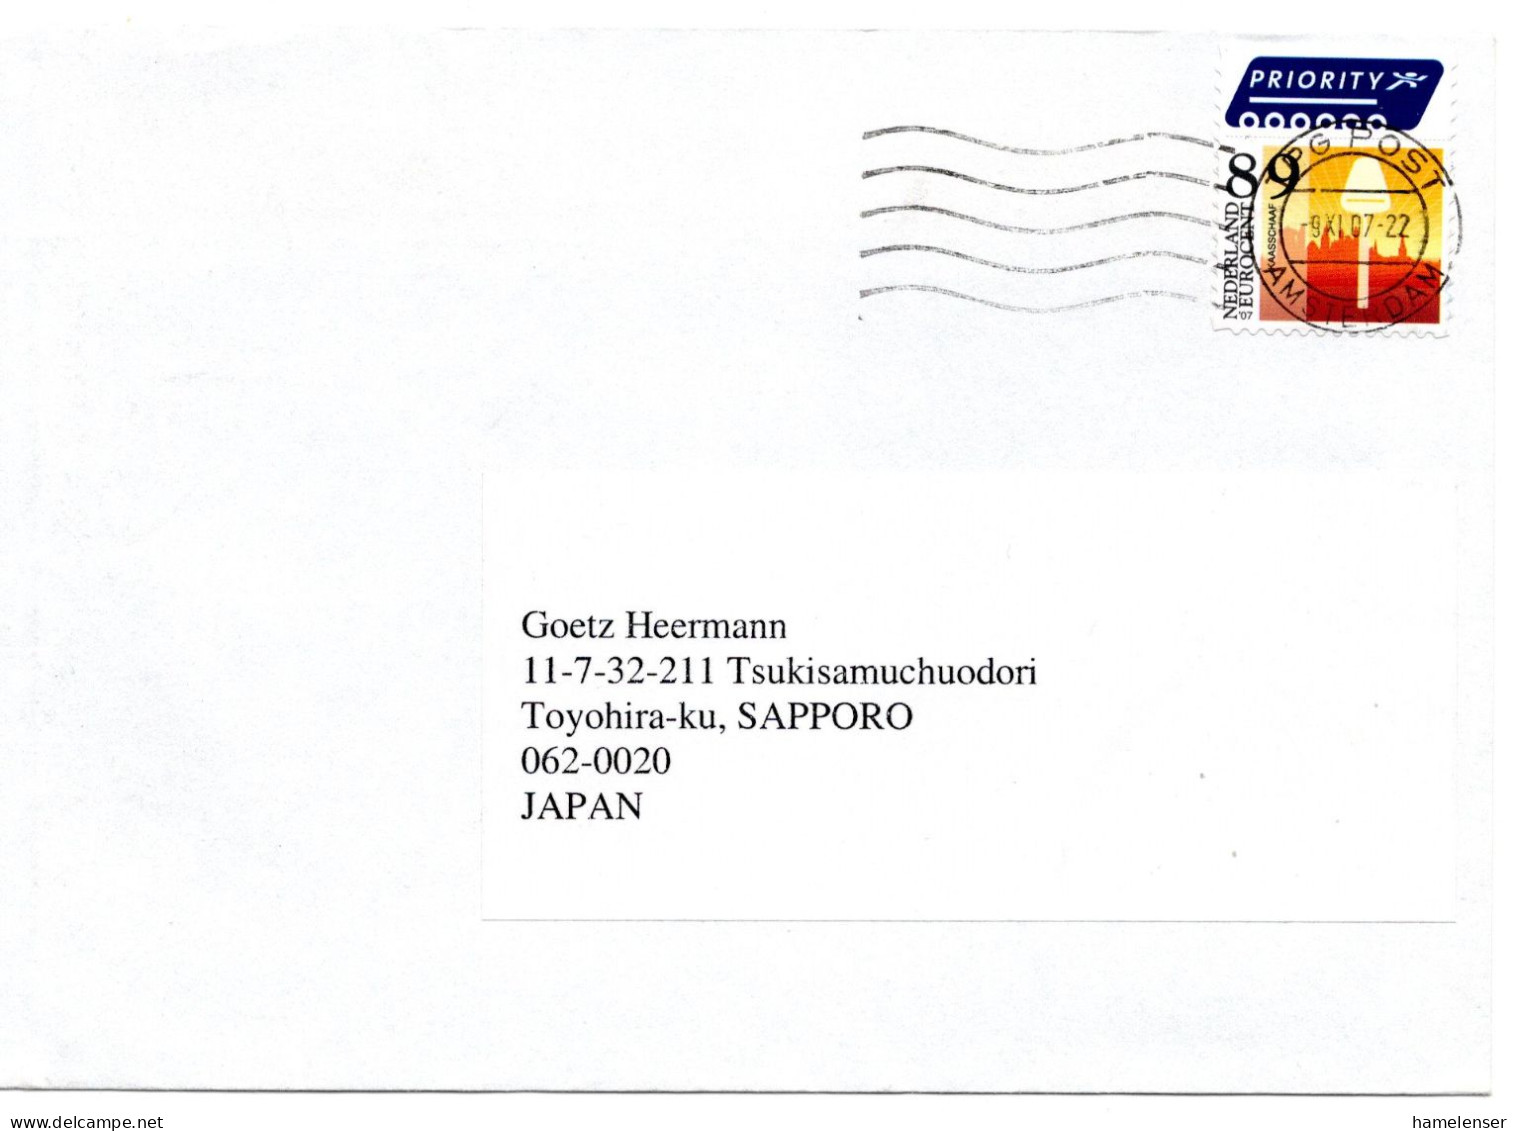 67201 - Niederlande - 2007 - 89c Kaesehobel EF A LpBf AMSTERDAM -> Japan - Briefe U. Dokumente